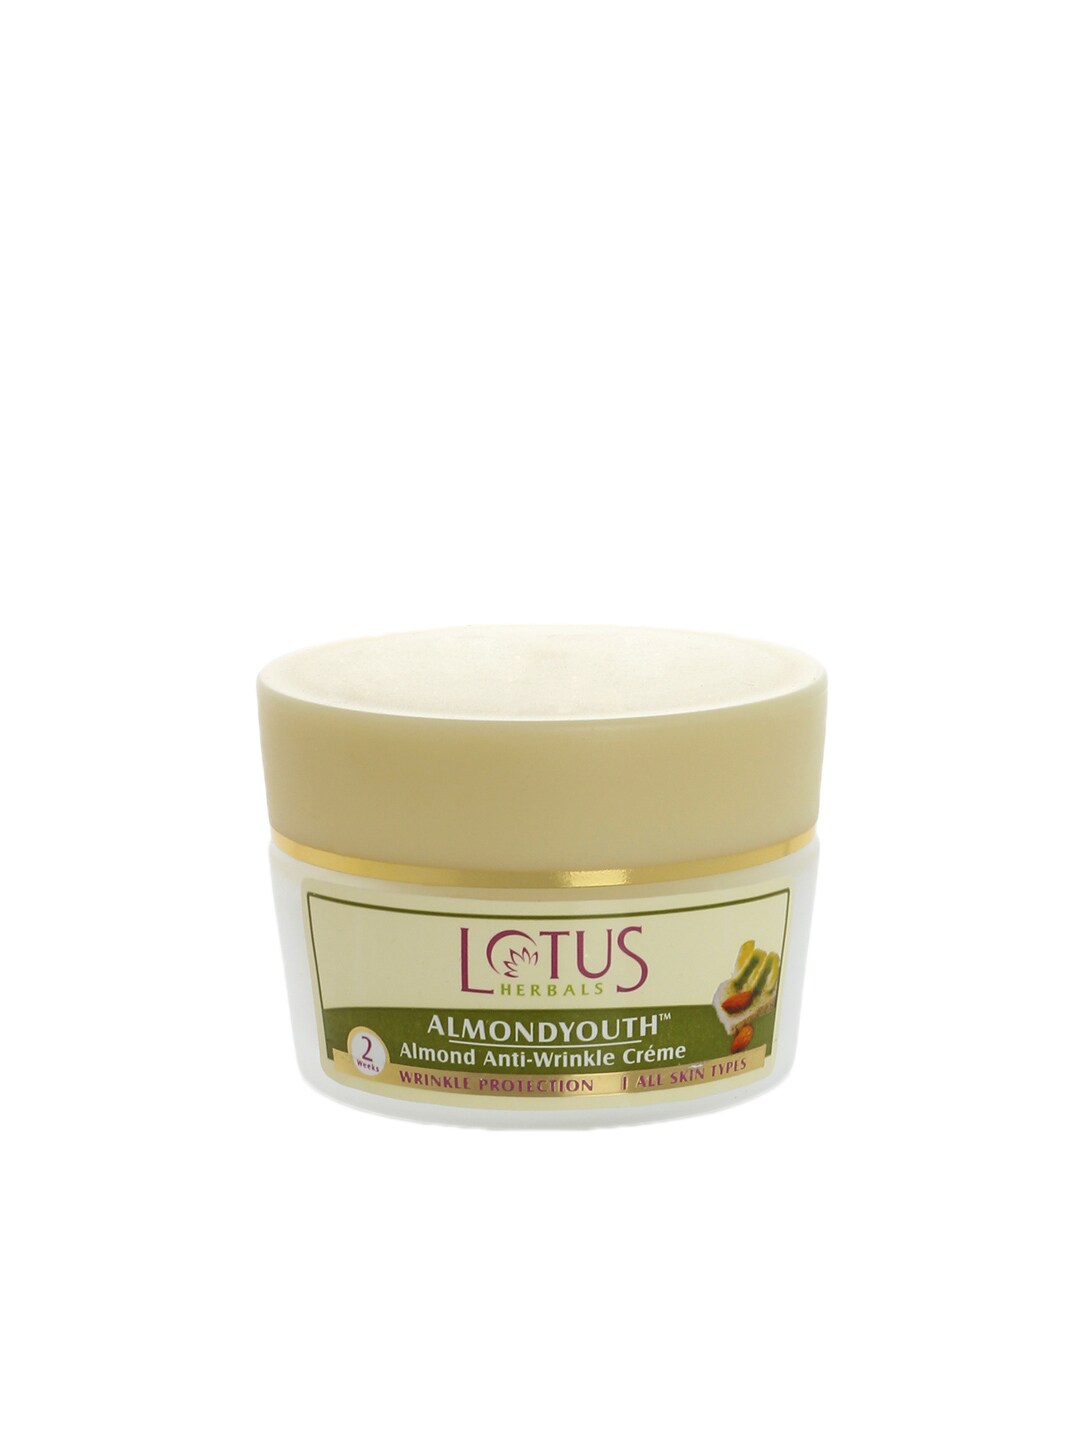 Lotus Herbals Almond Anti-Wrinkle Creme